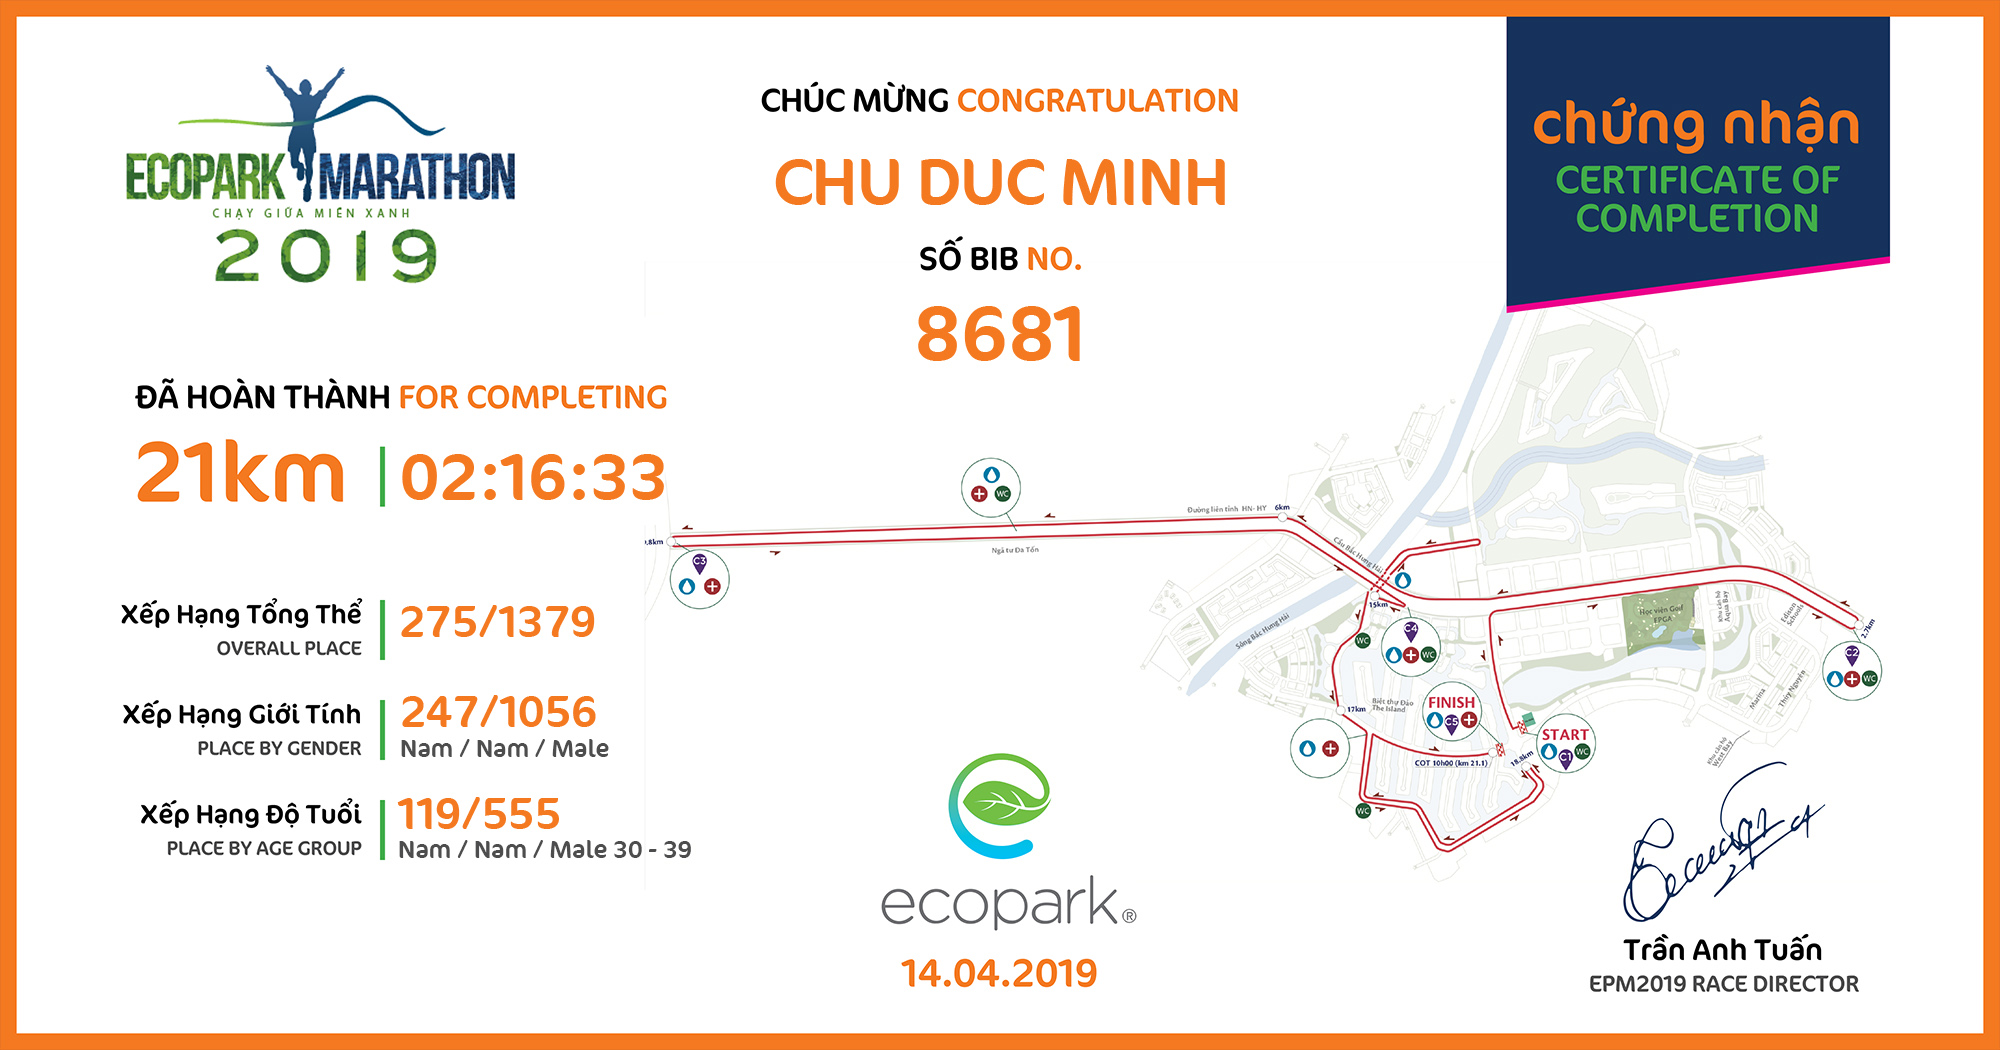 8681 - Chu Duc Minh